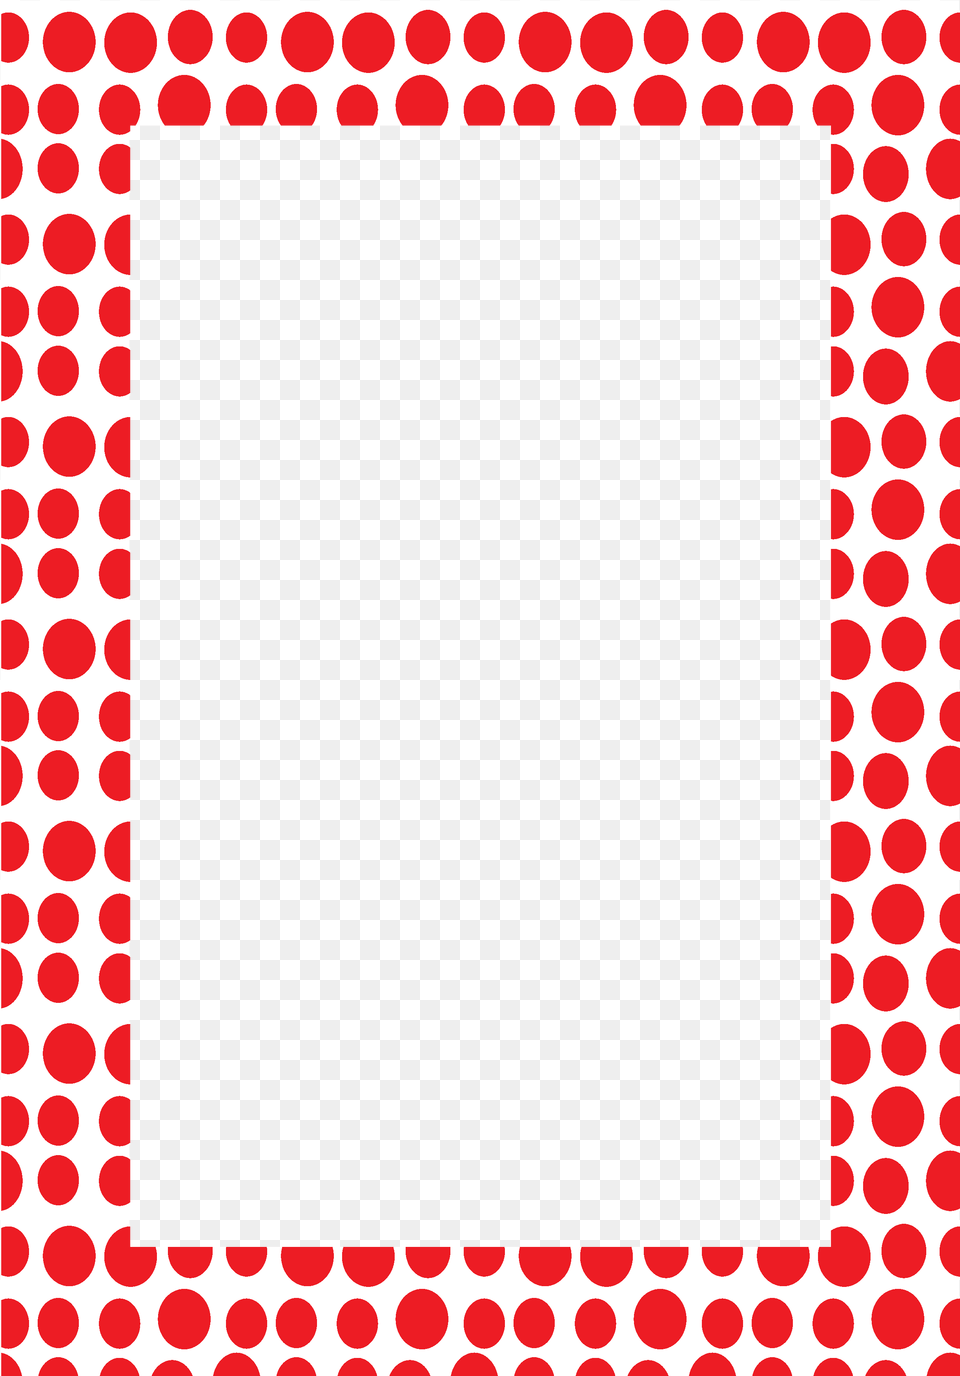 Frame Red Dots Place Value Patterns Anchor Chart, Pattern, Polka Dot, Blackboard Png Image